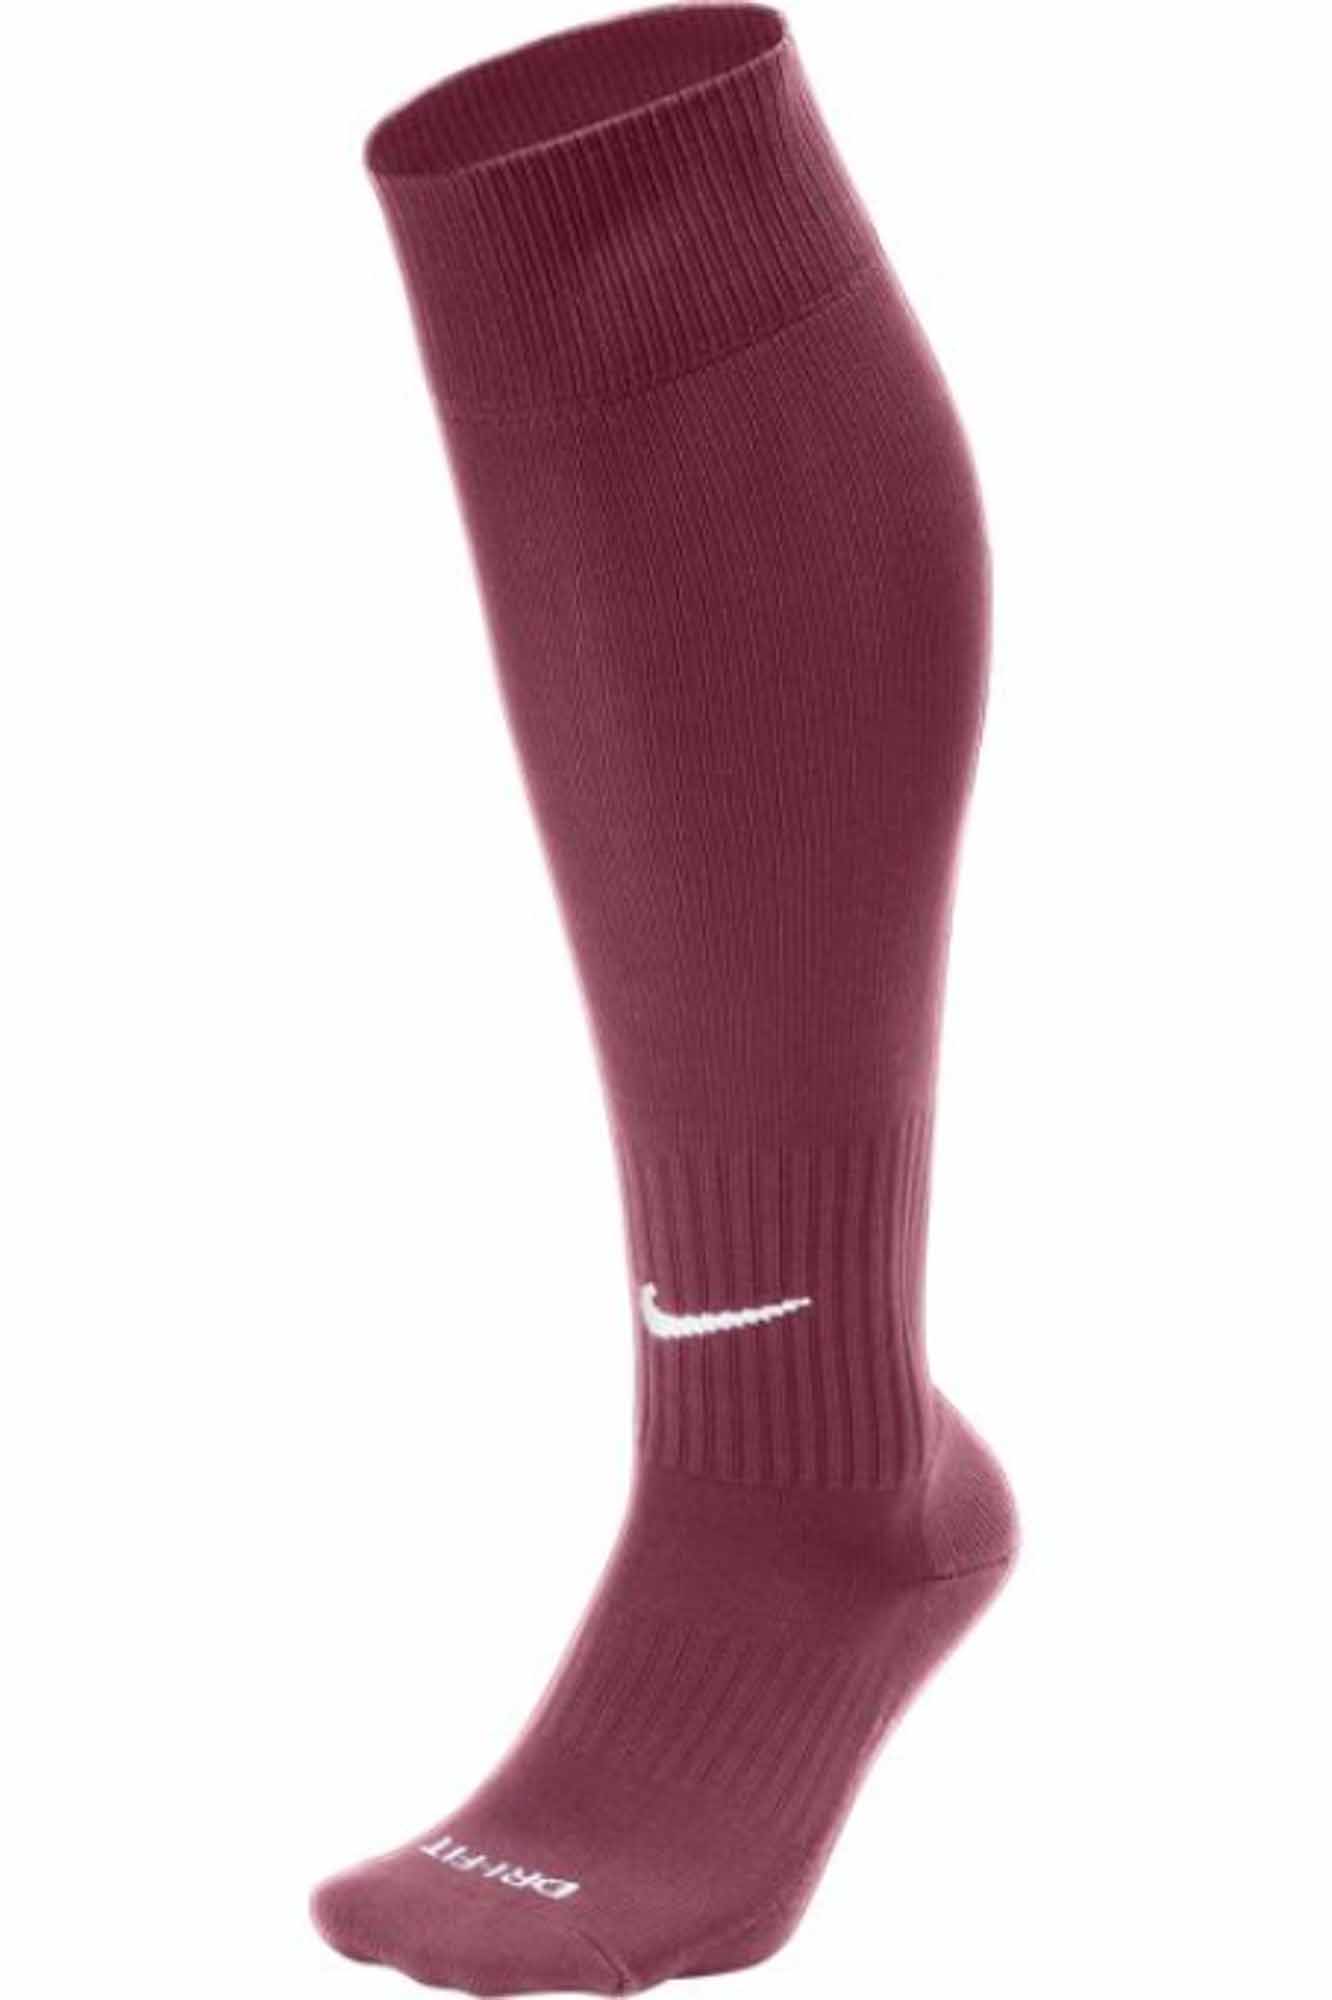 Nike Classic Soccer Socks Size Chart